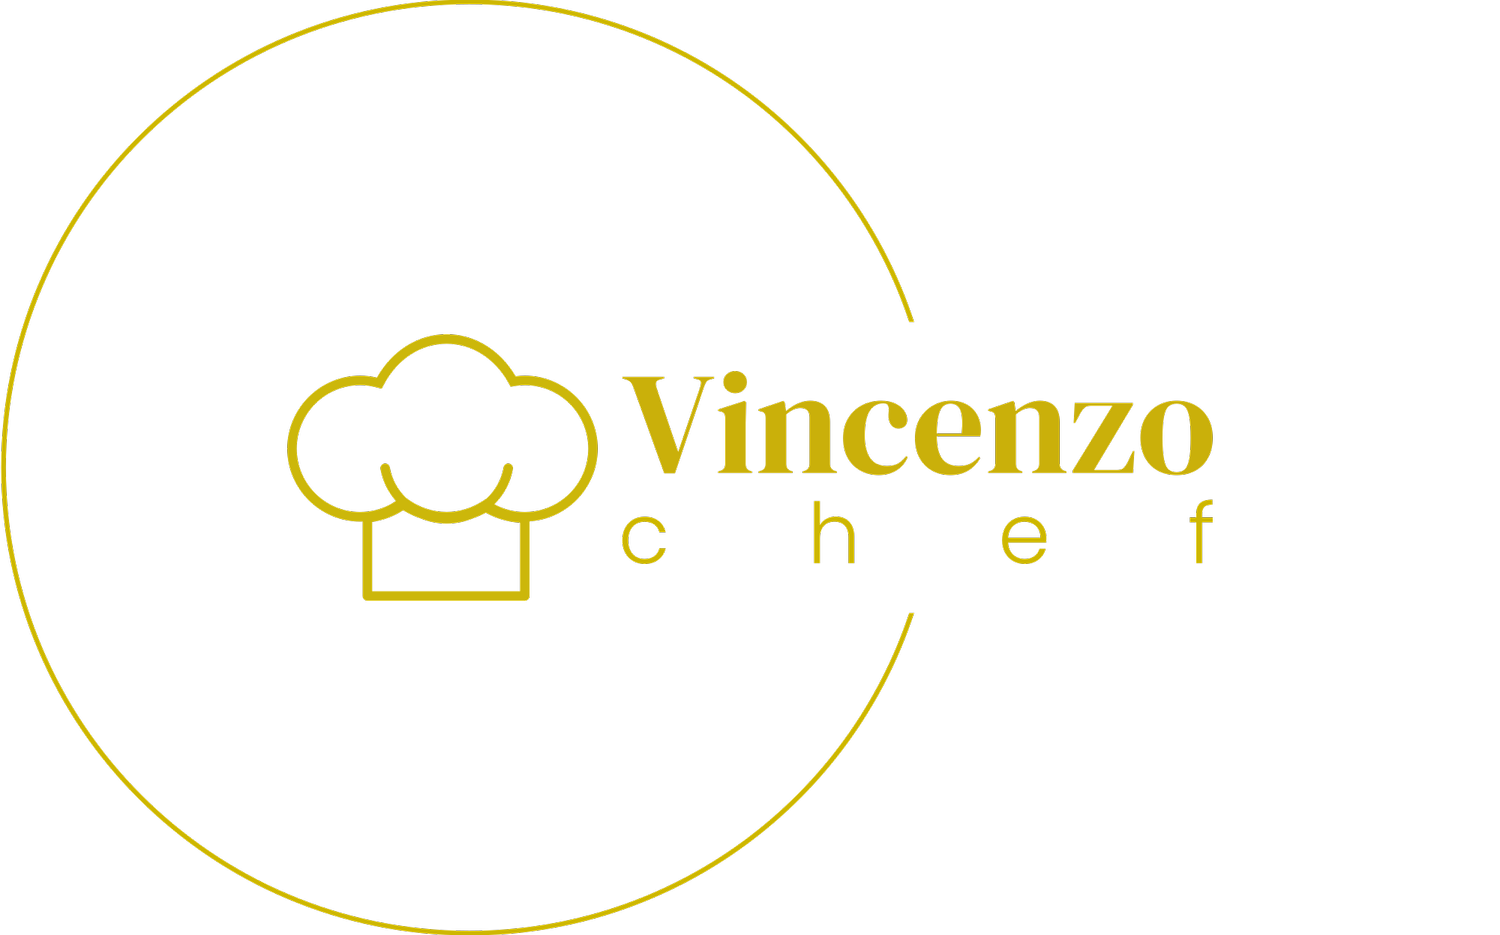 Chef Vincenzo